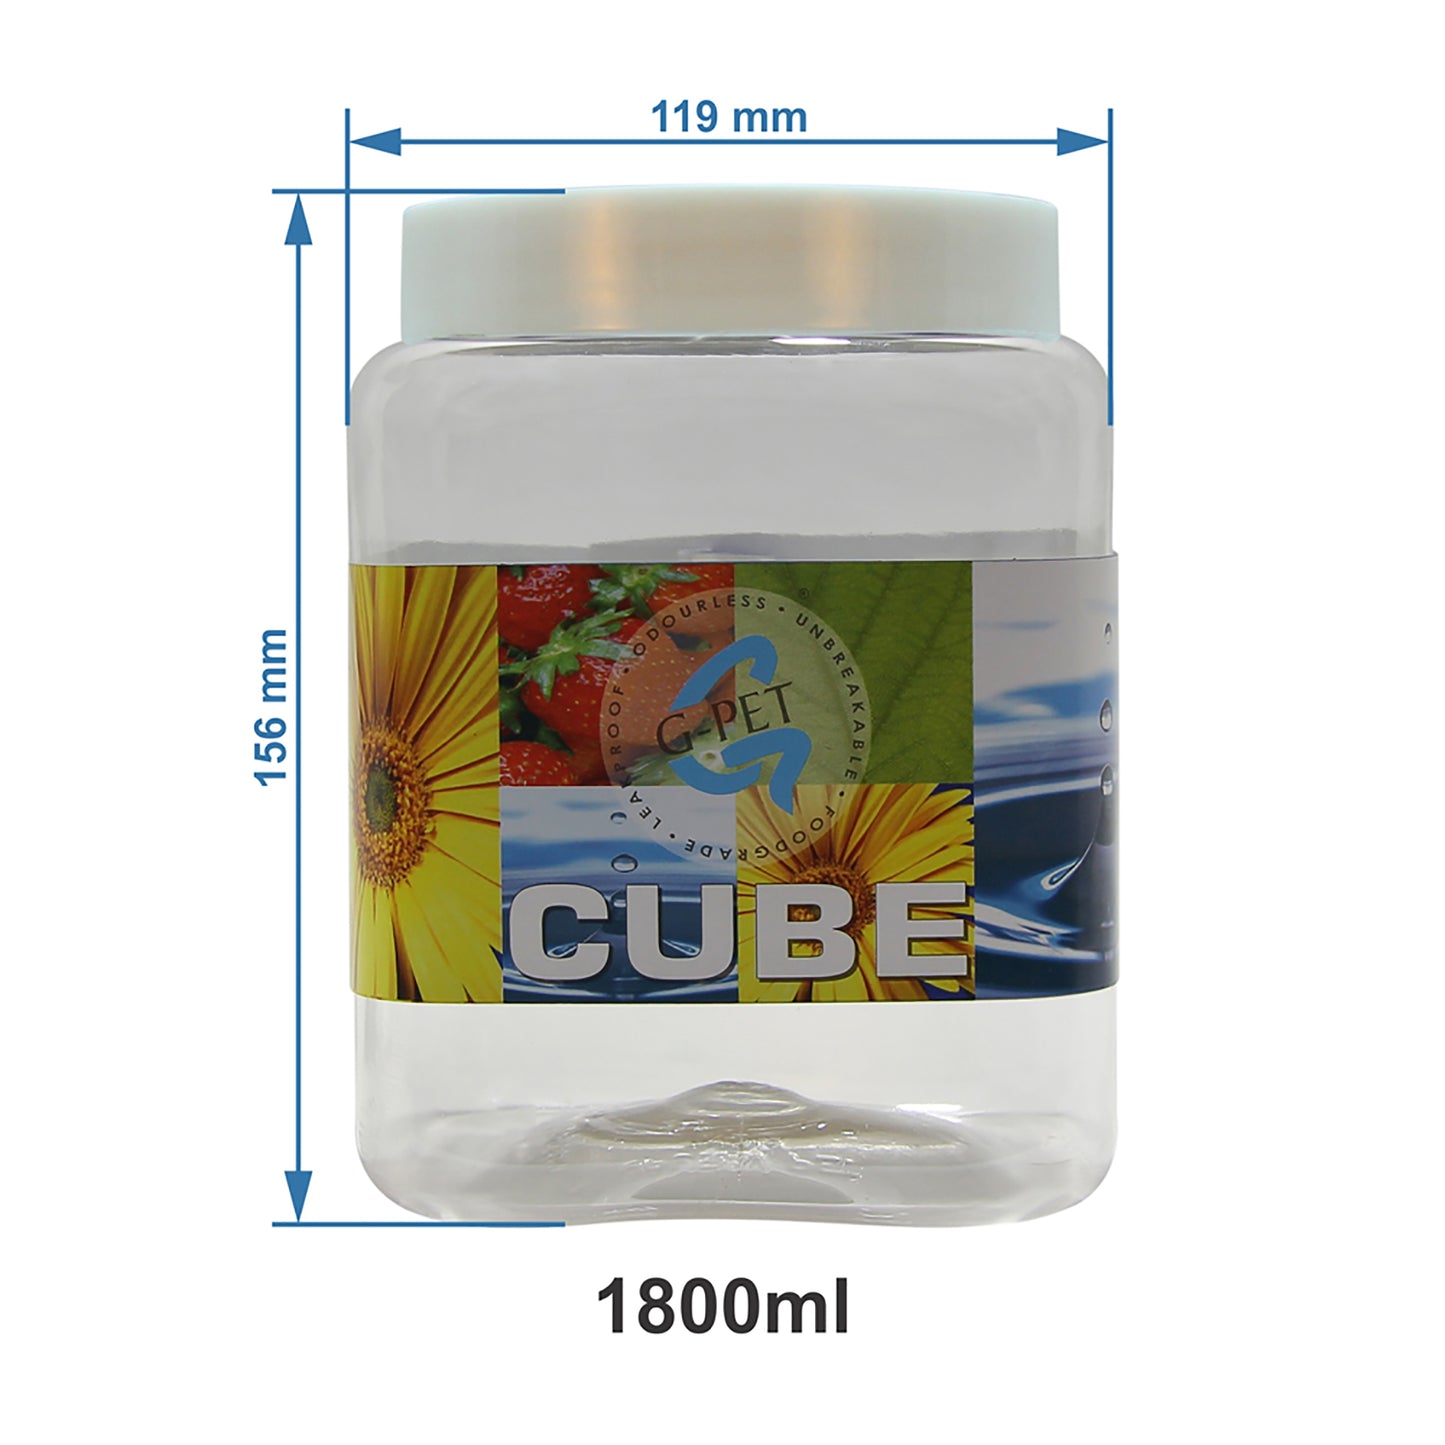 Cube PET Jar / Container PET Plastic Airtight Container with White Cap (3, 1500ML)